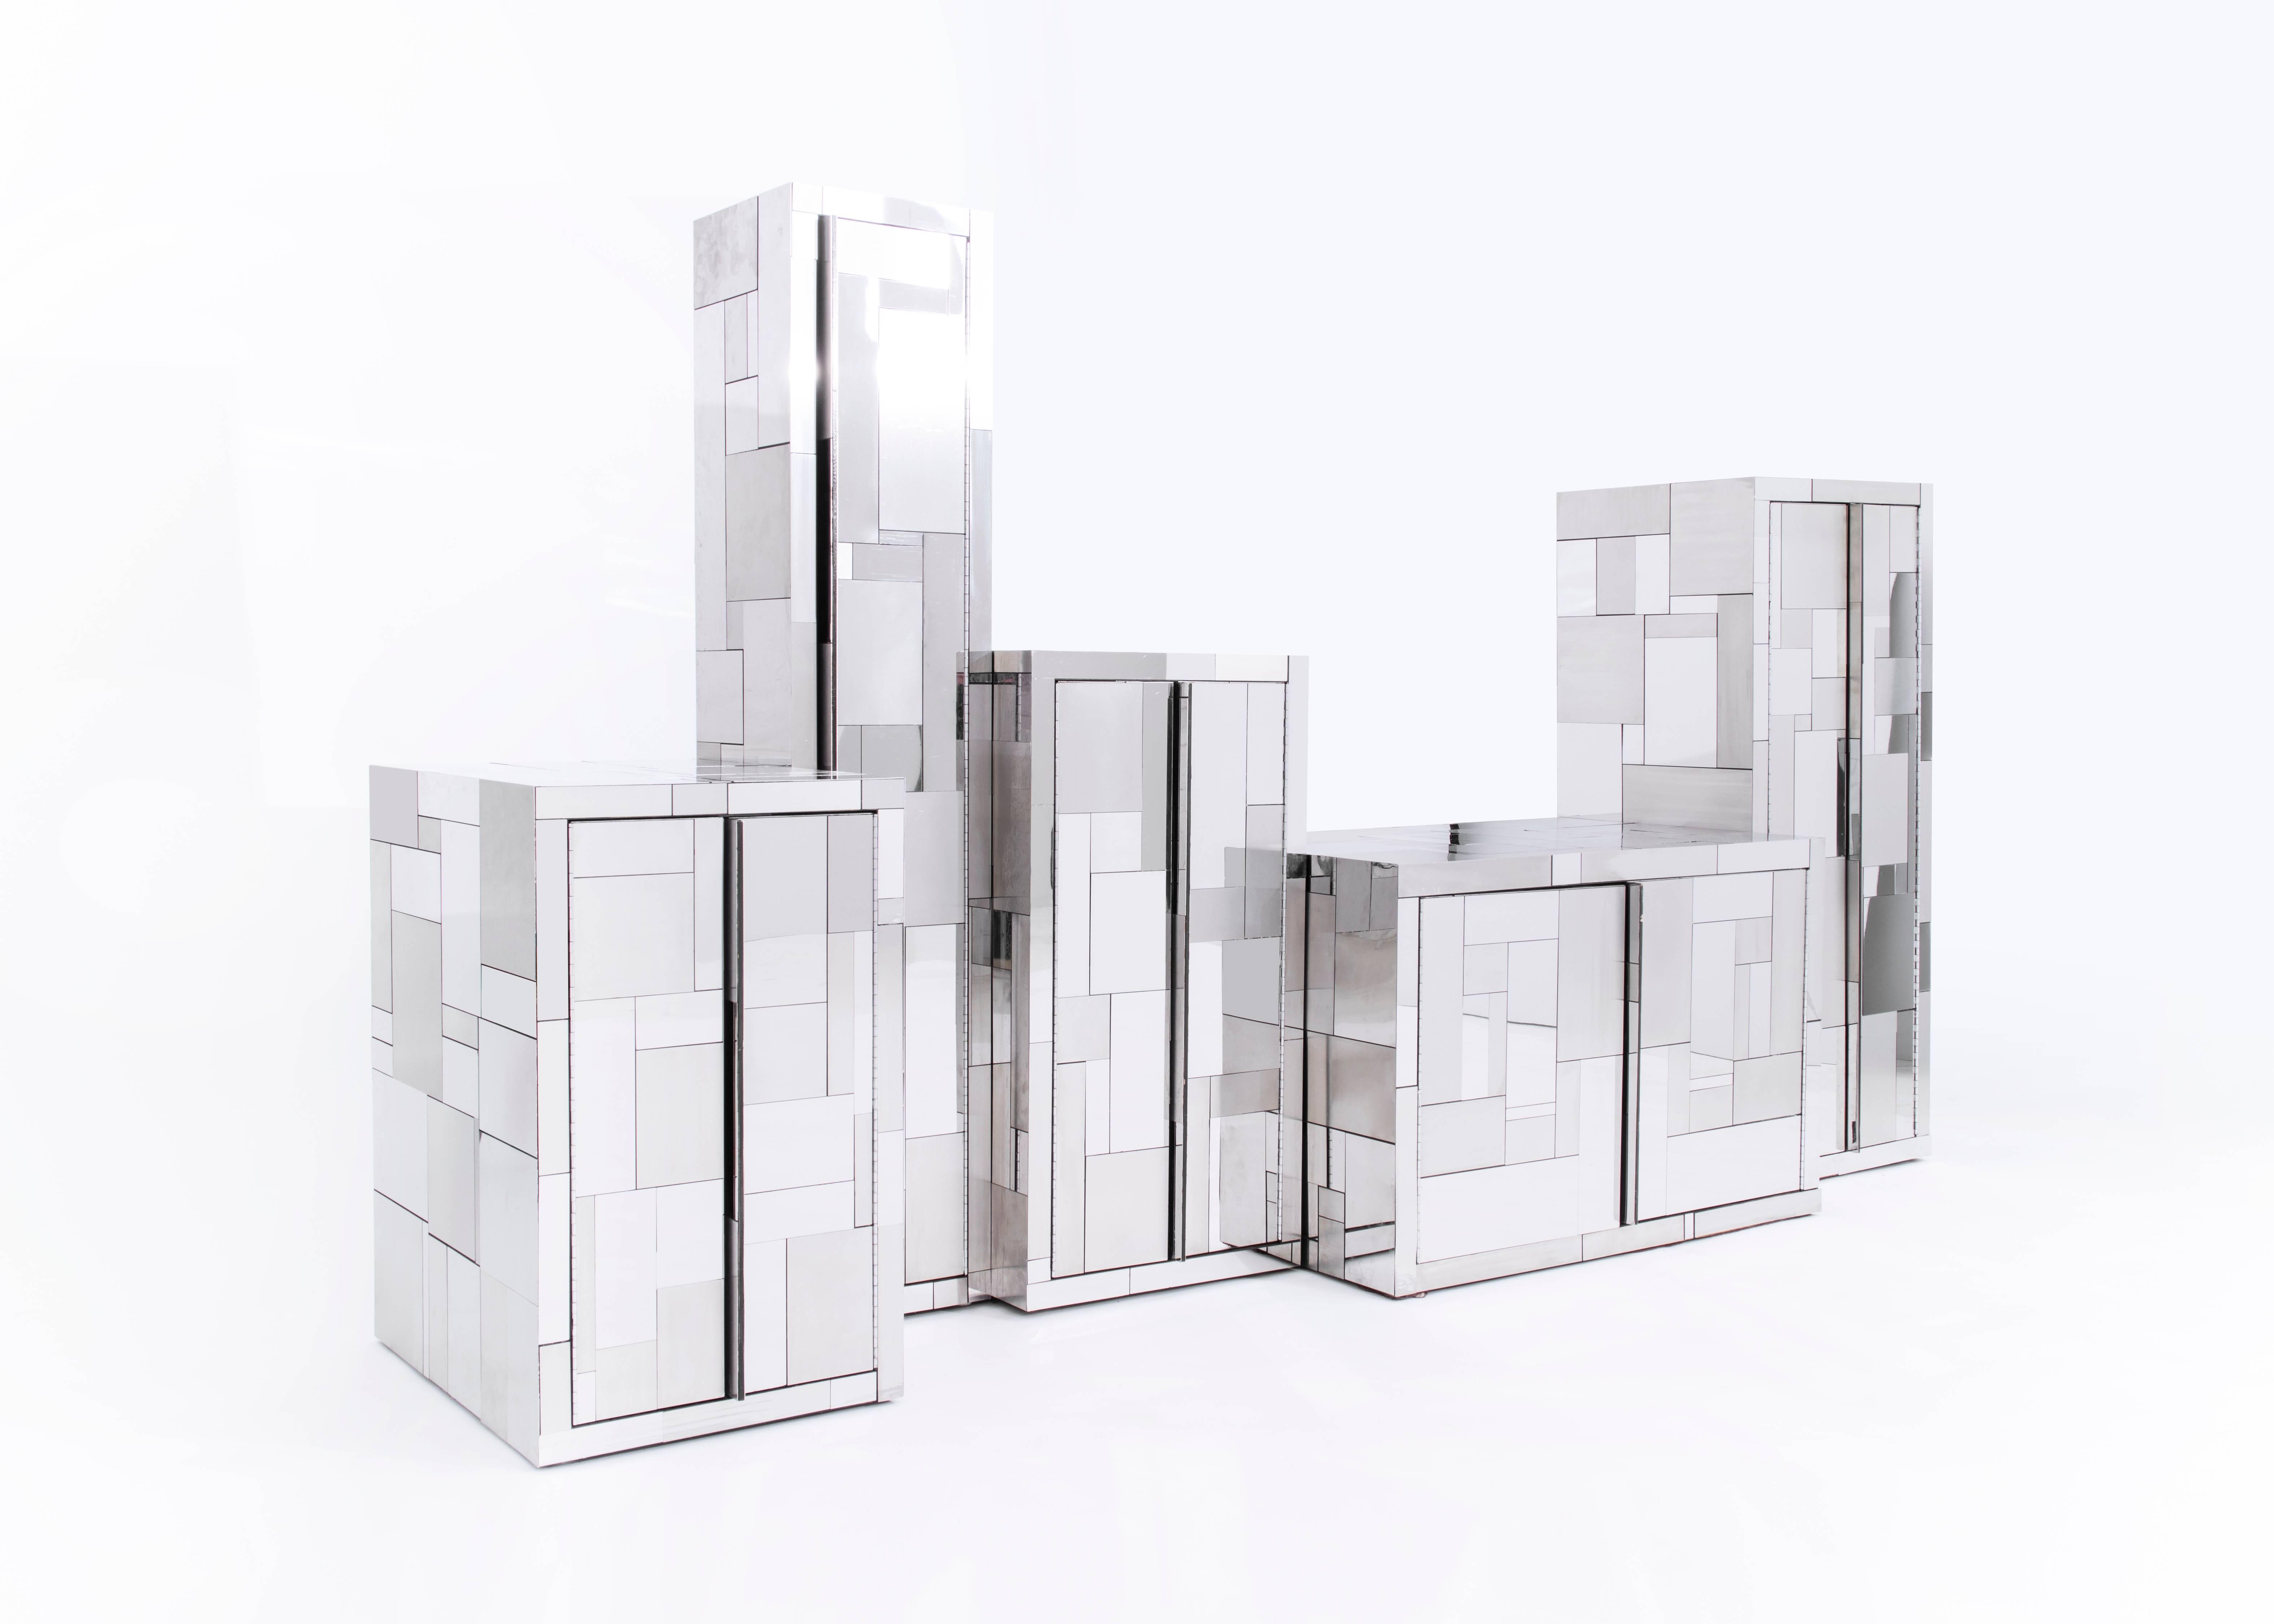 Paul Evans cityscape skyline for Directional, titled 